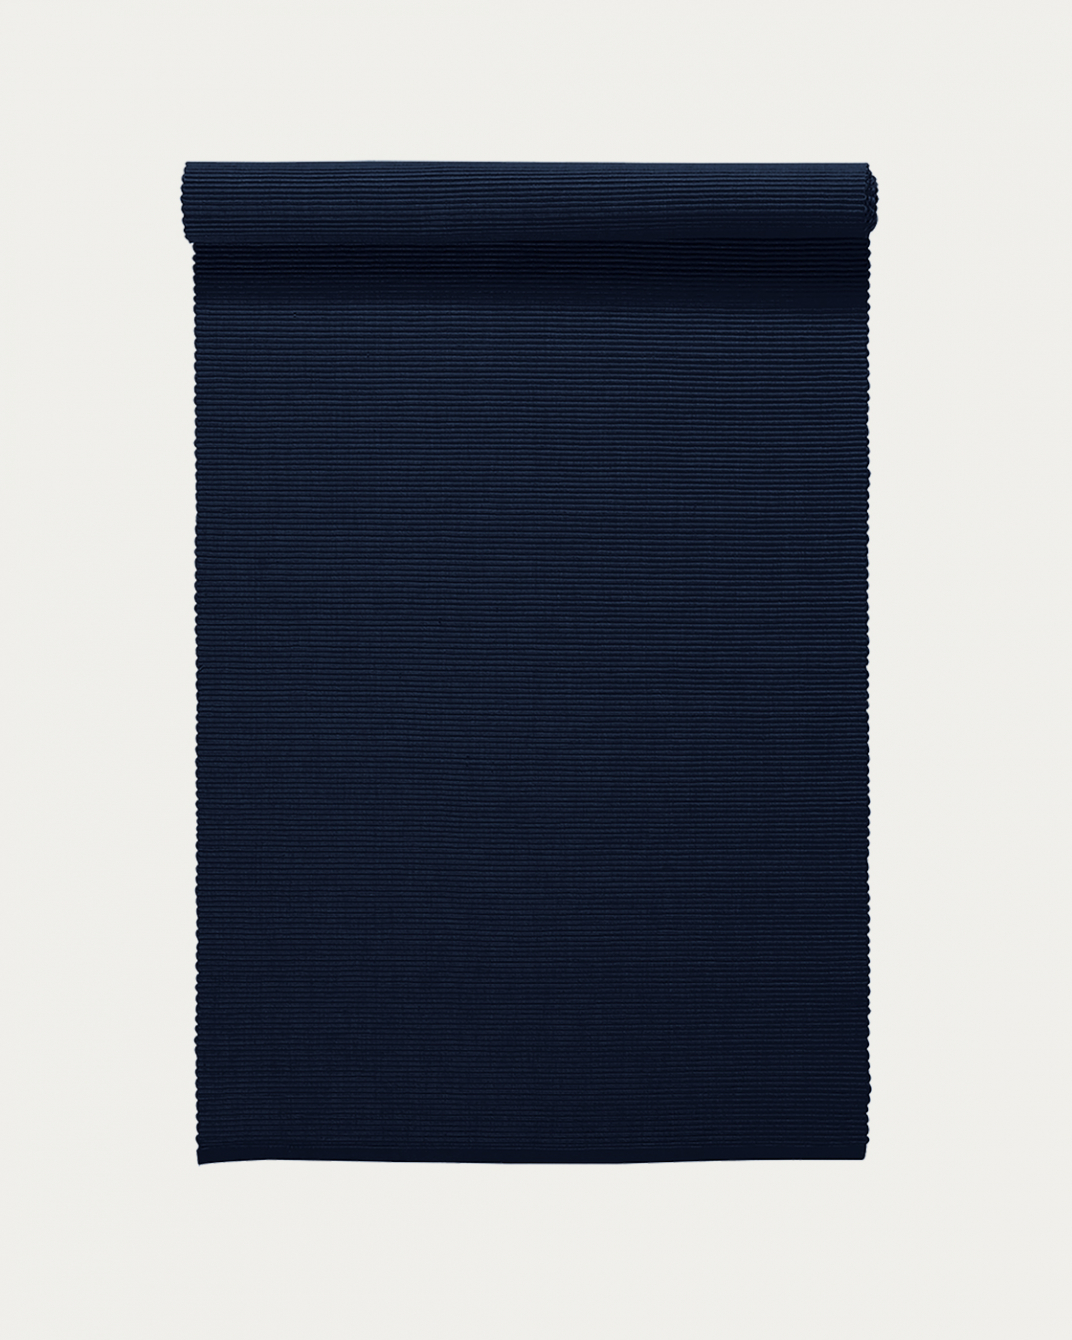 UNI Runner 45x150 cm Dark navy blue